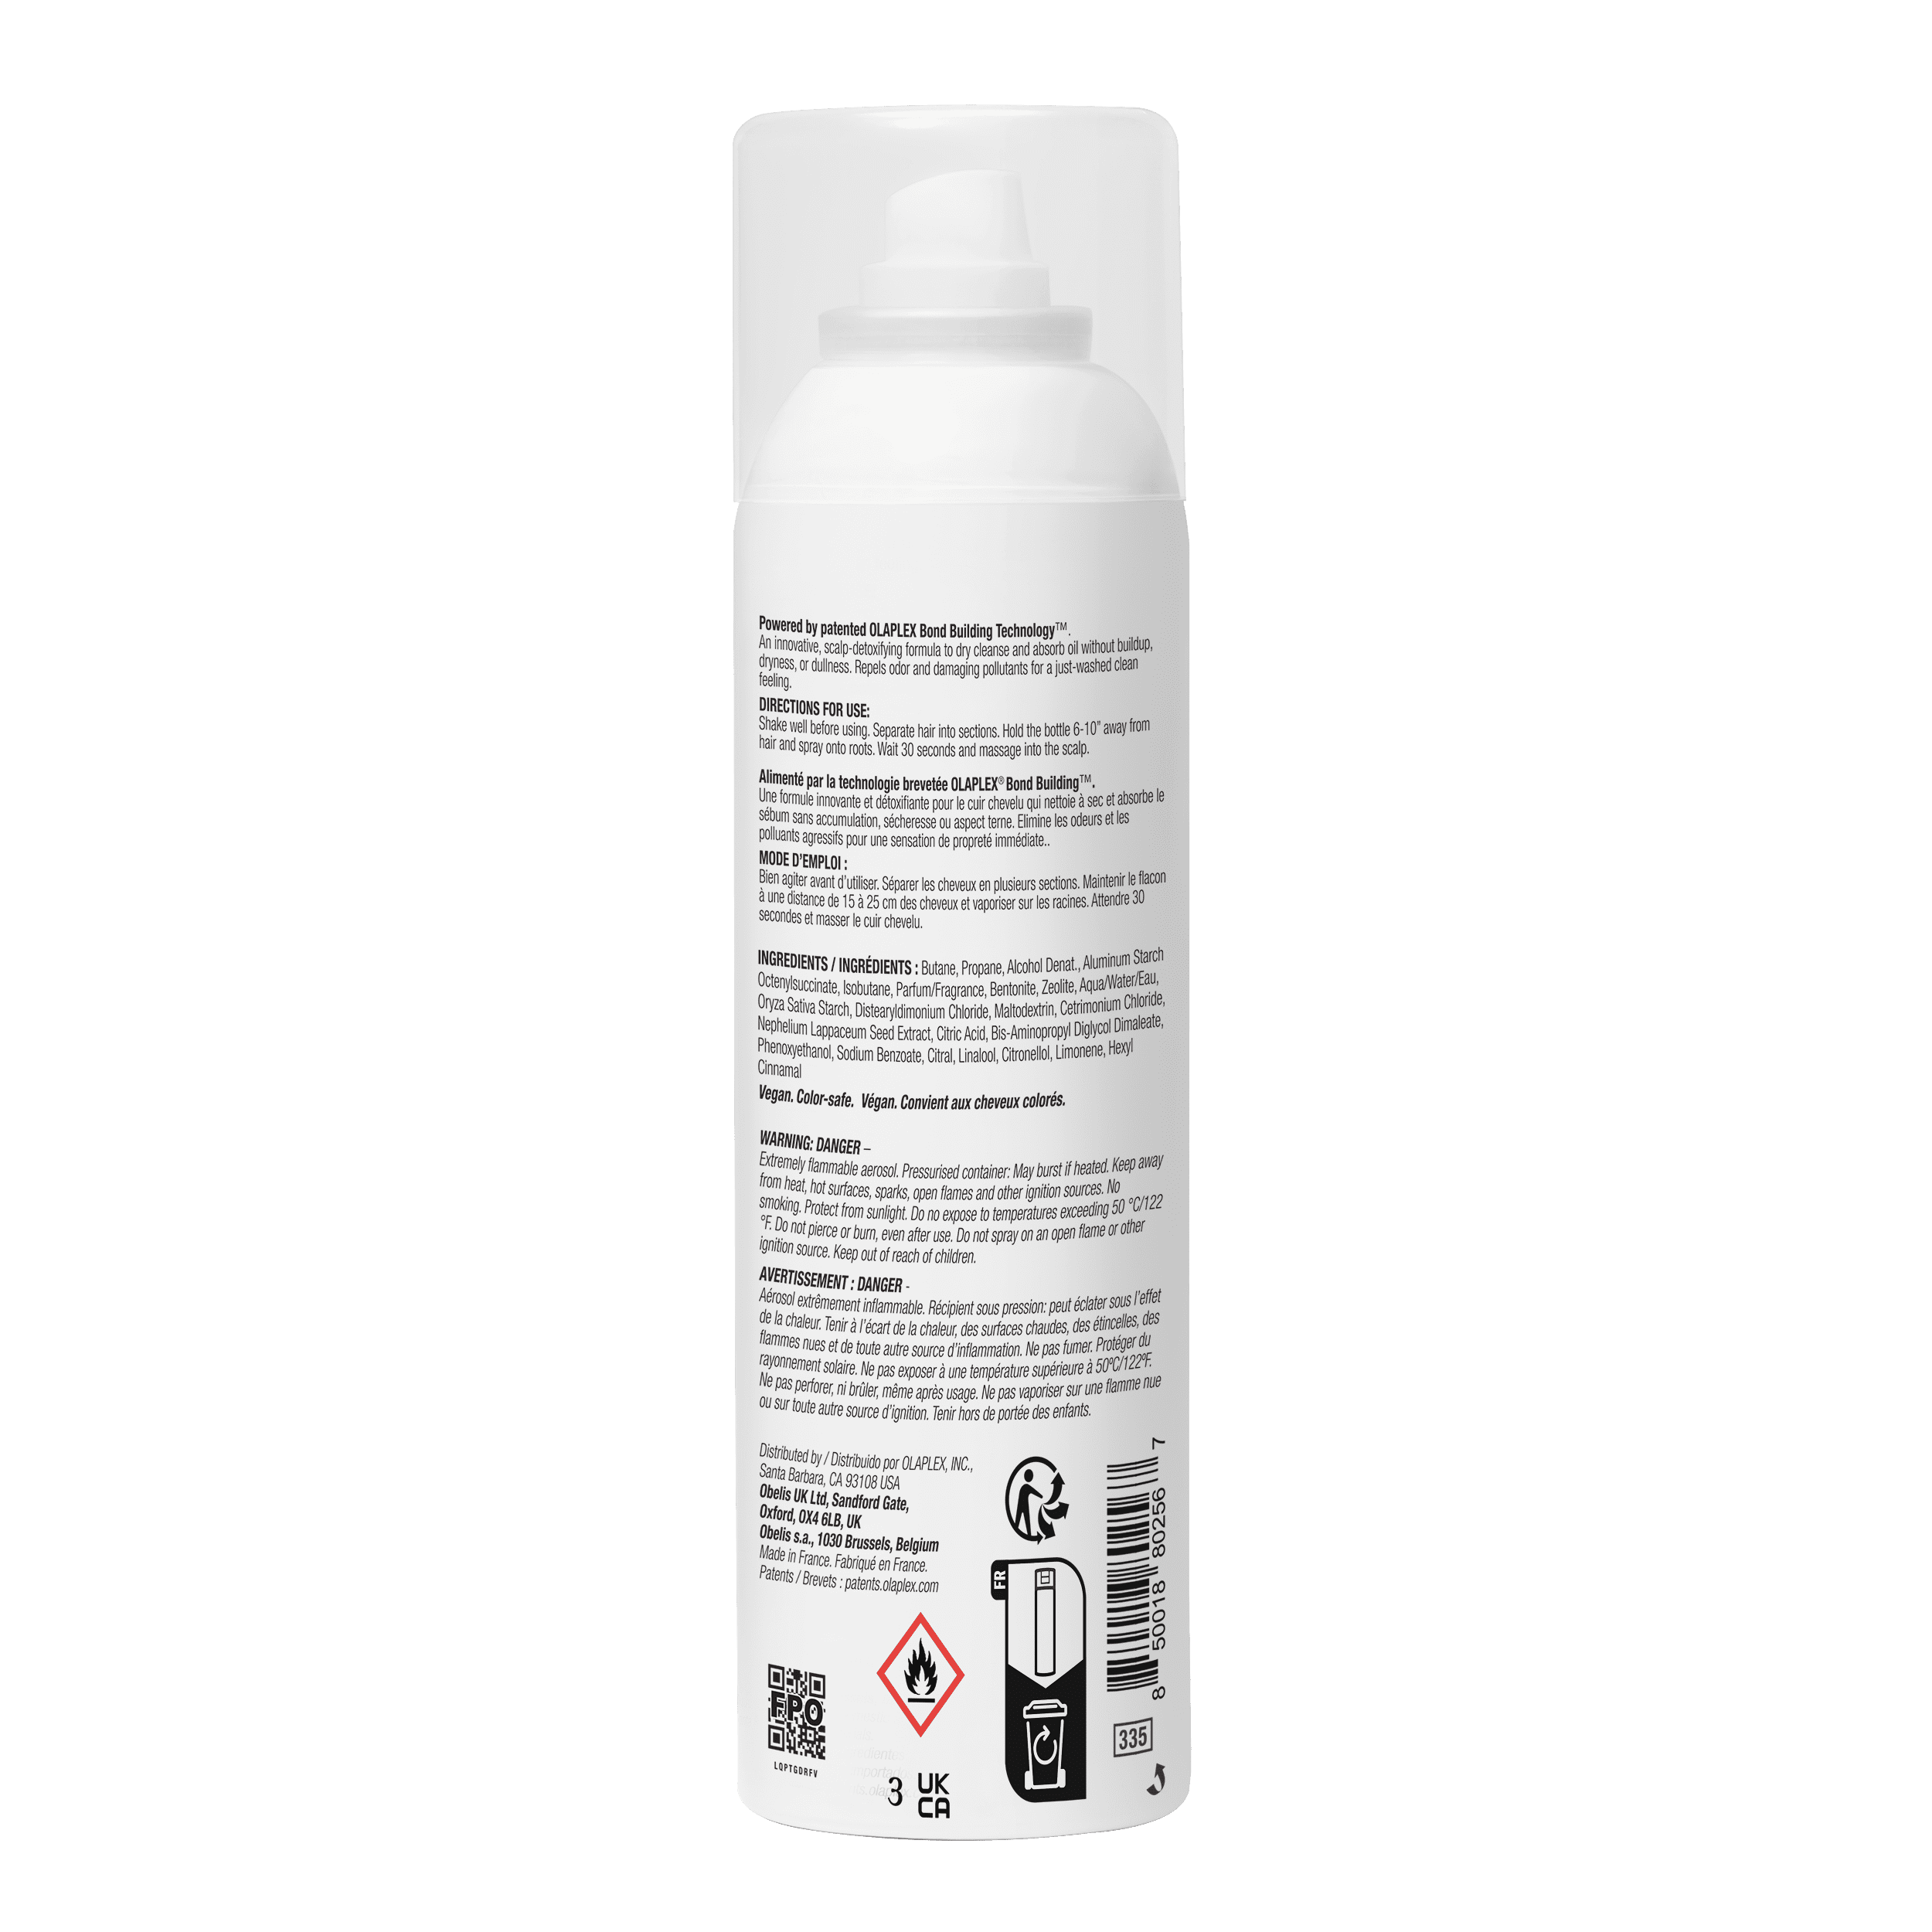 produit: Nº.4d Clean Volume Detox Dry Shampoo